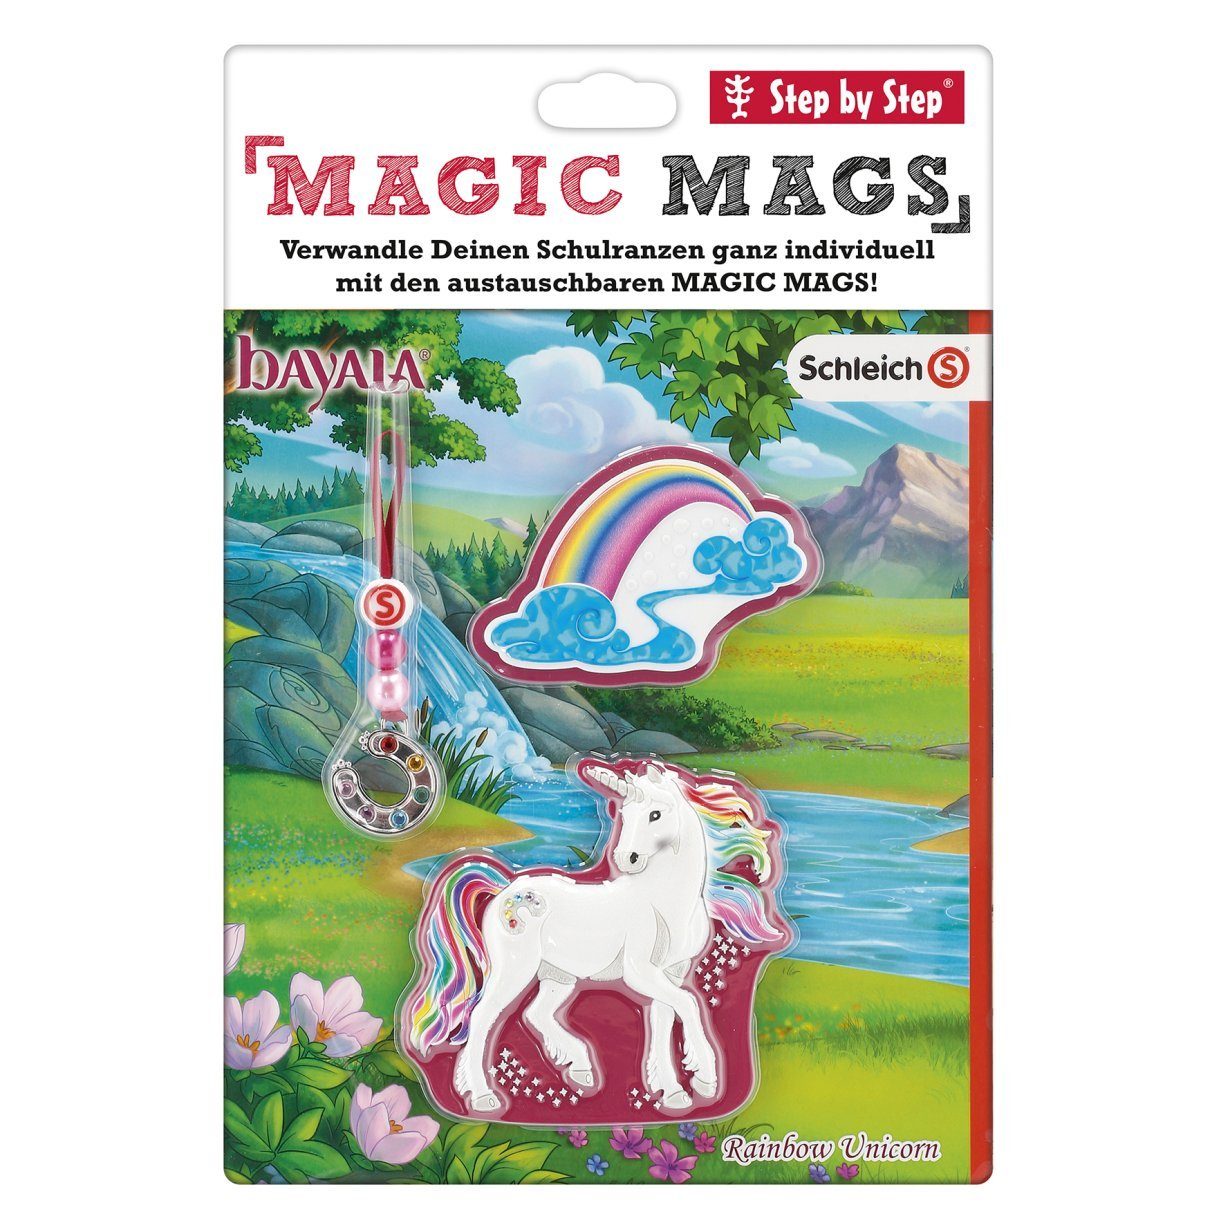 Step by Step Schulranzen Step by Step MAGIC MAGS Schleich, bayala®, Rainbow Unicorn